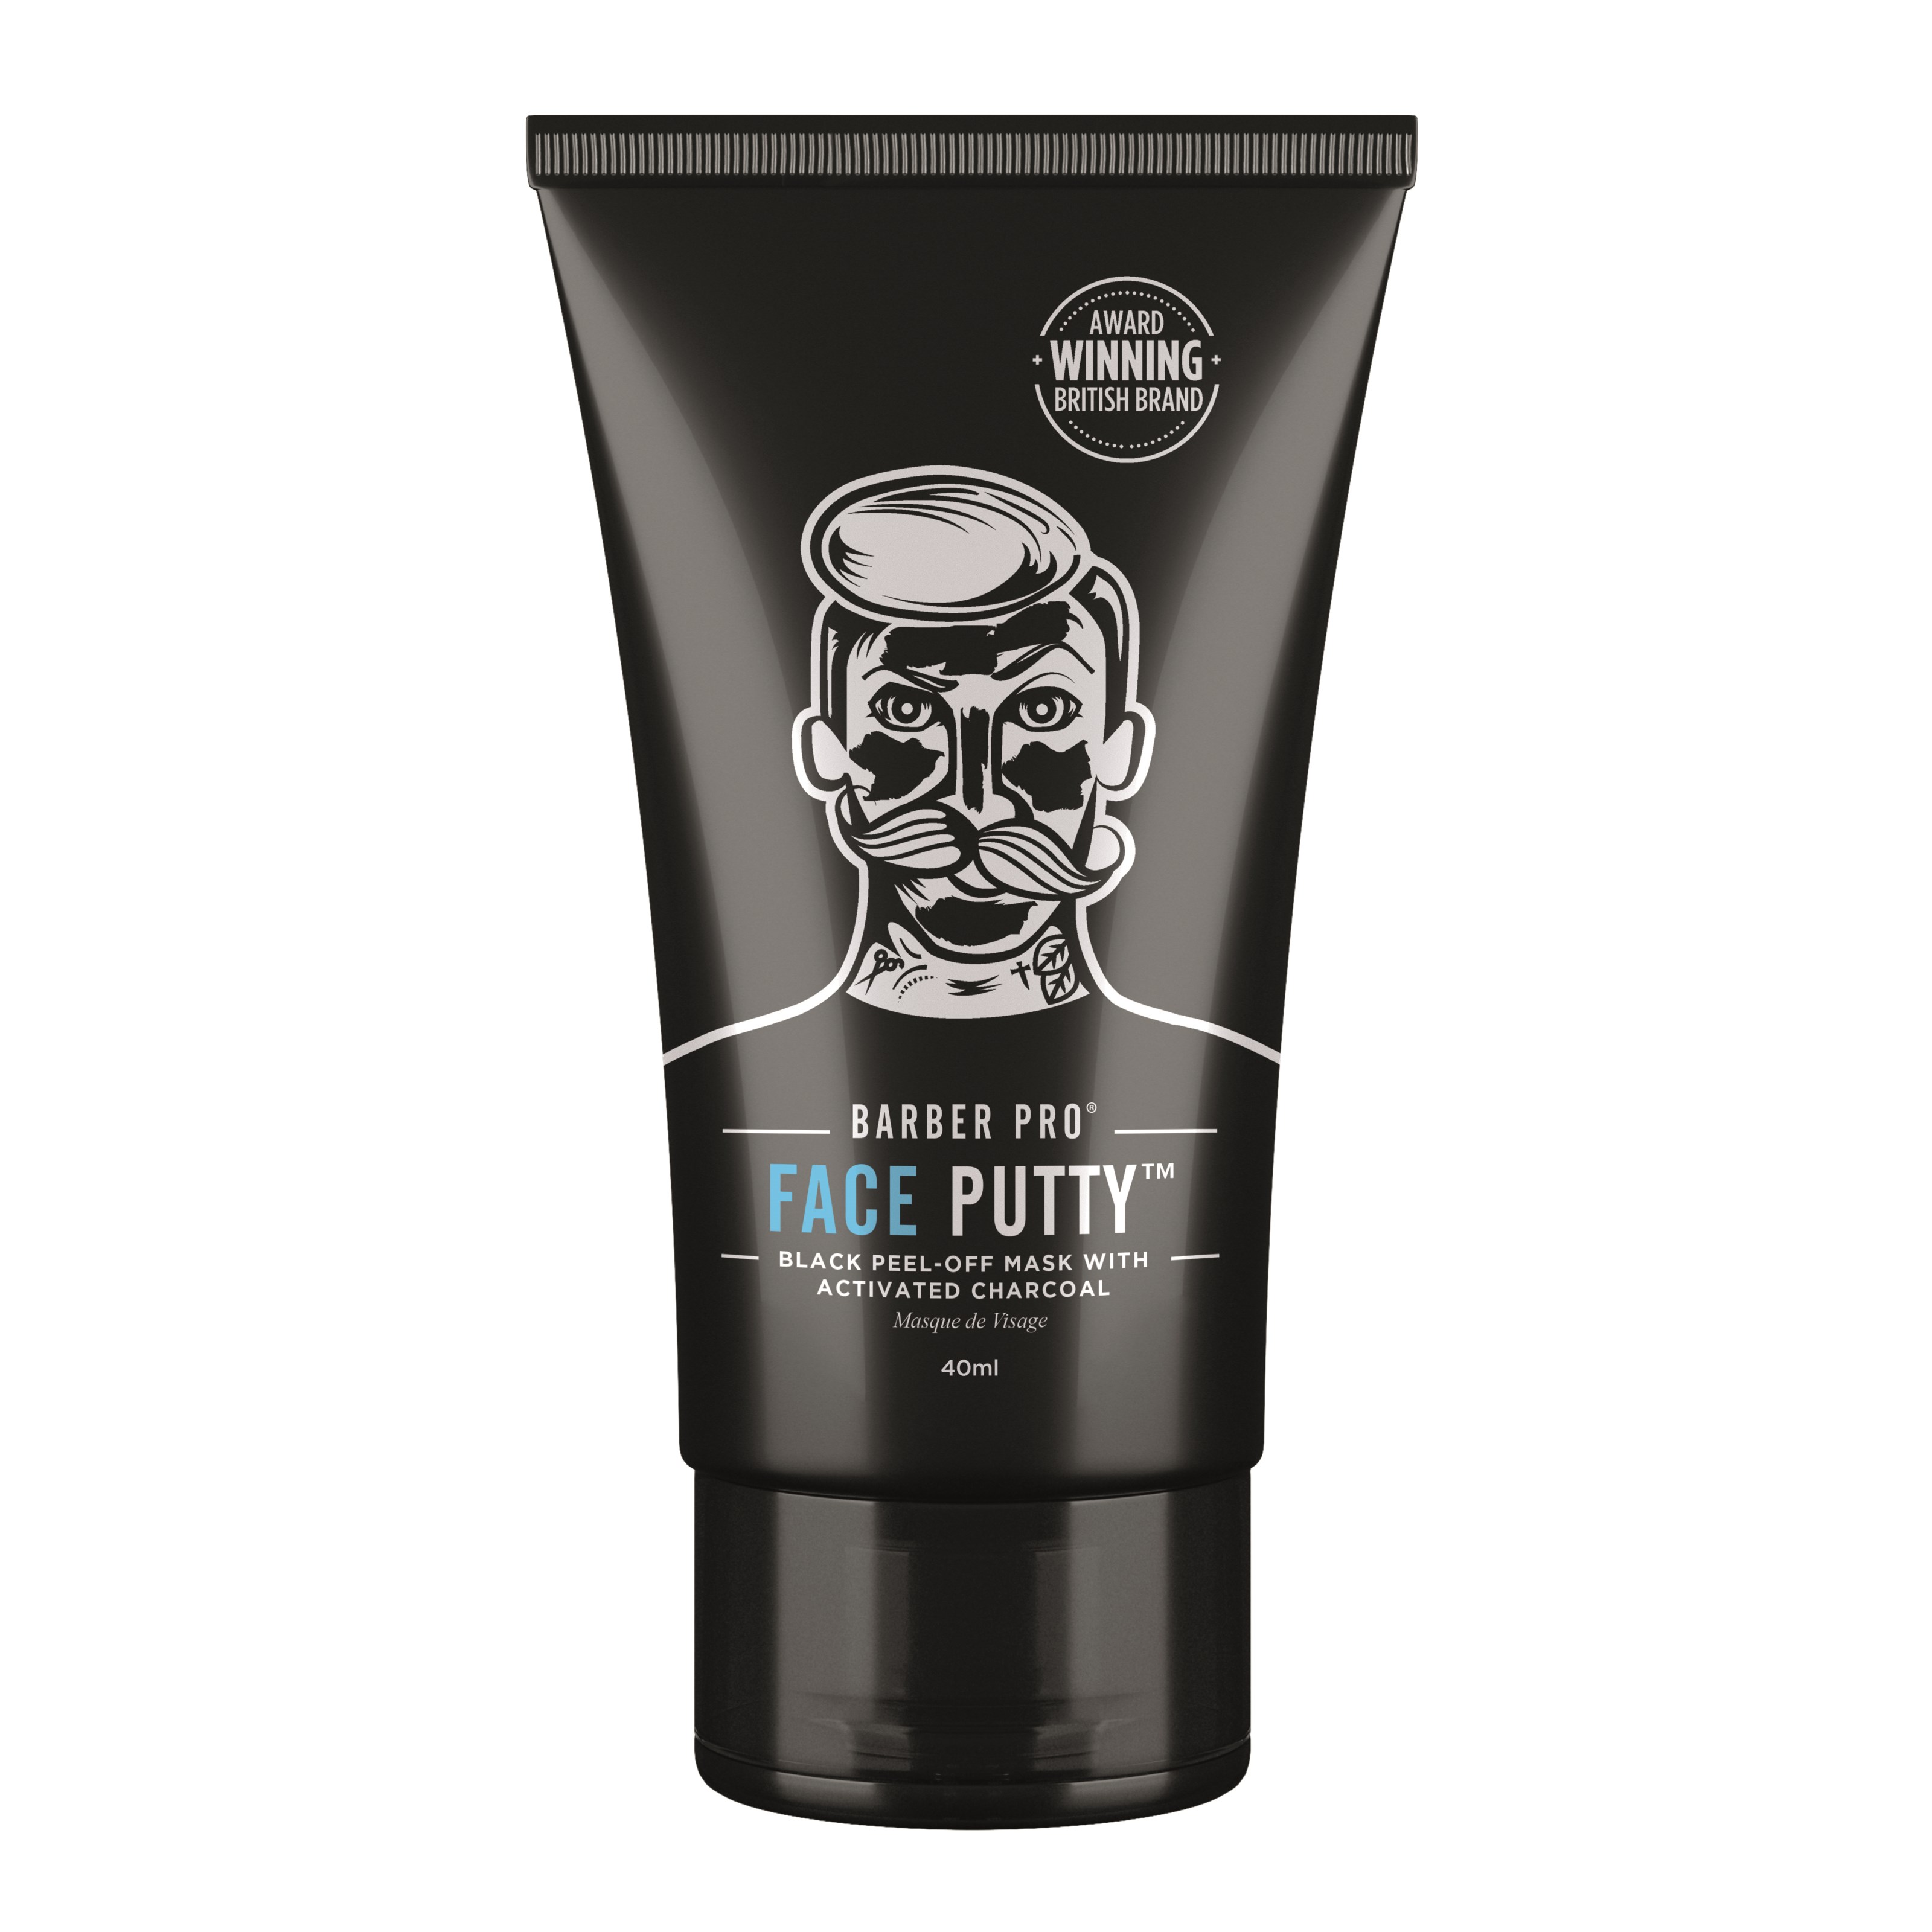 Läs mer om Barber pro Face Putty Black Peel off mask